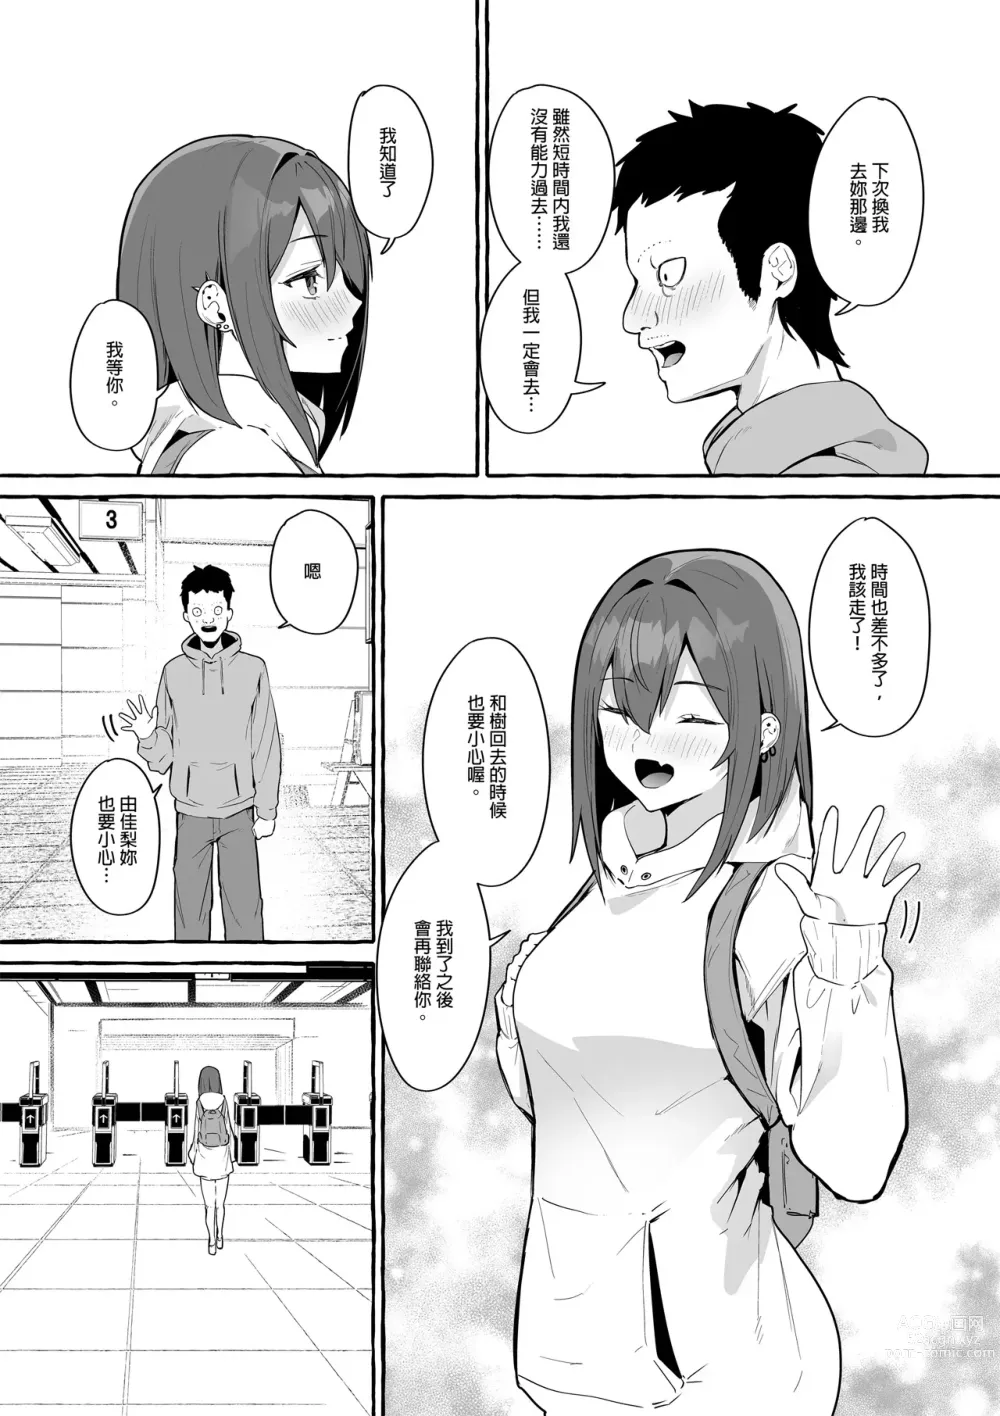 Page 55 of doujinshi ネットで出会った巨乳彼女と会ったら搾り取られまくった話。